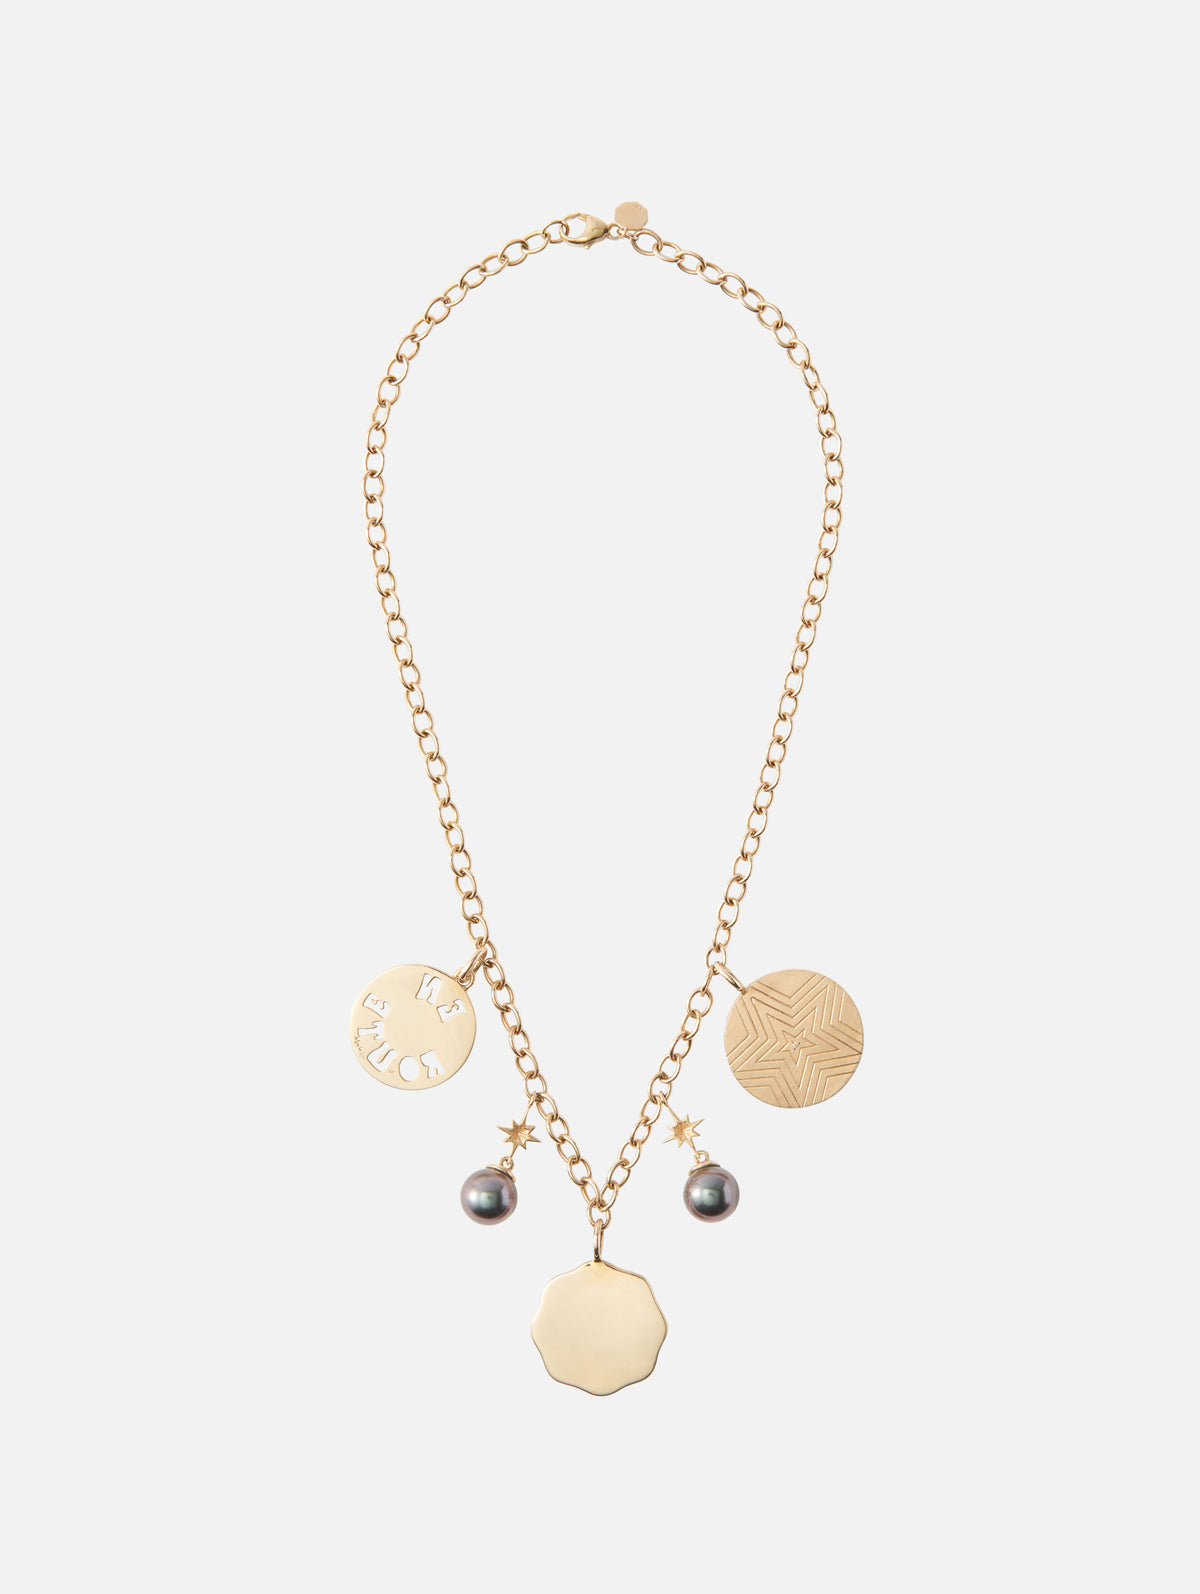 Circle necklace - Coin necklace - Gold coin necklace - multi